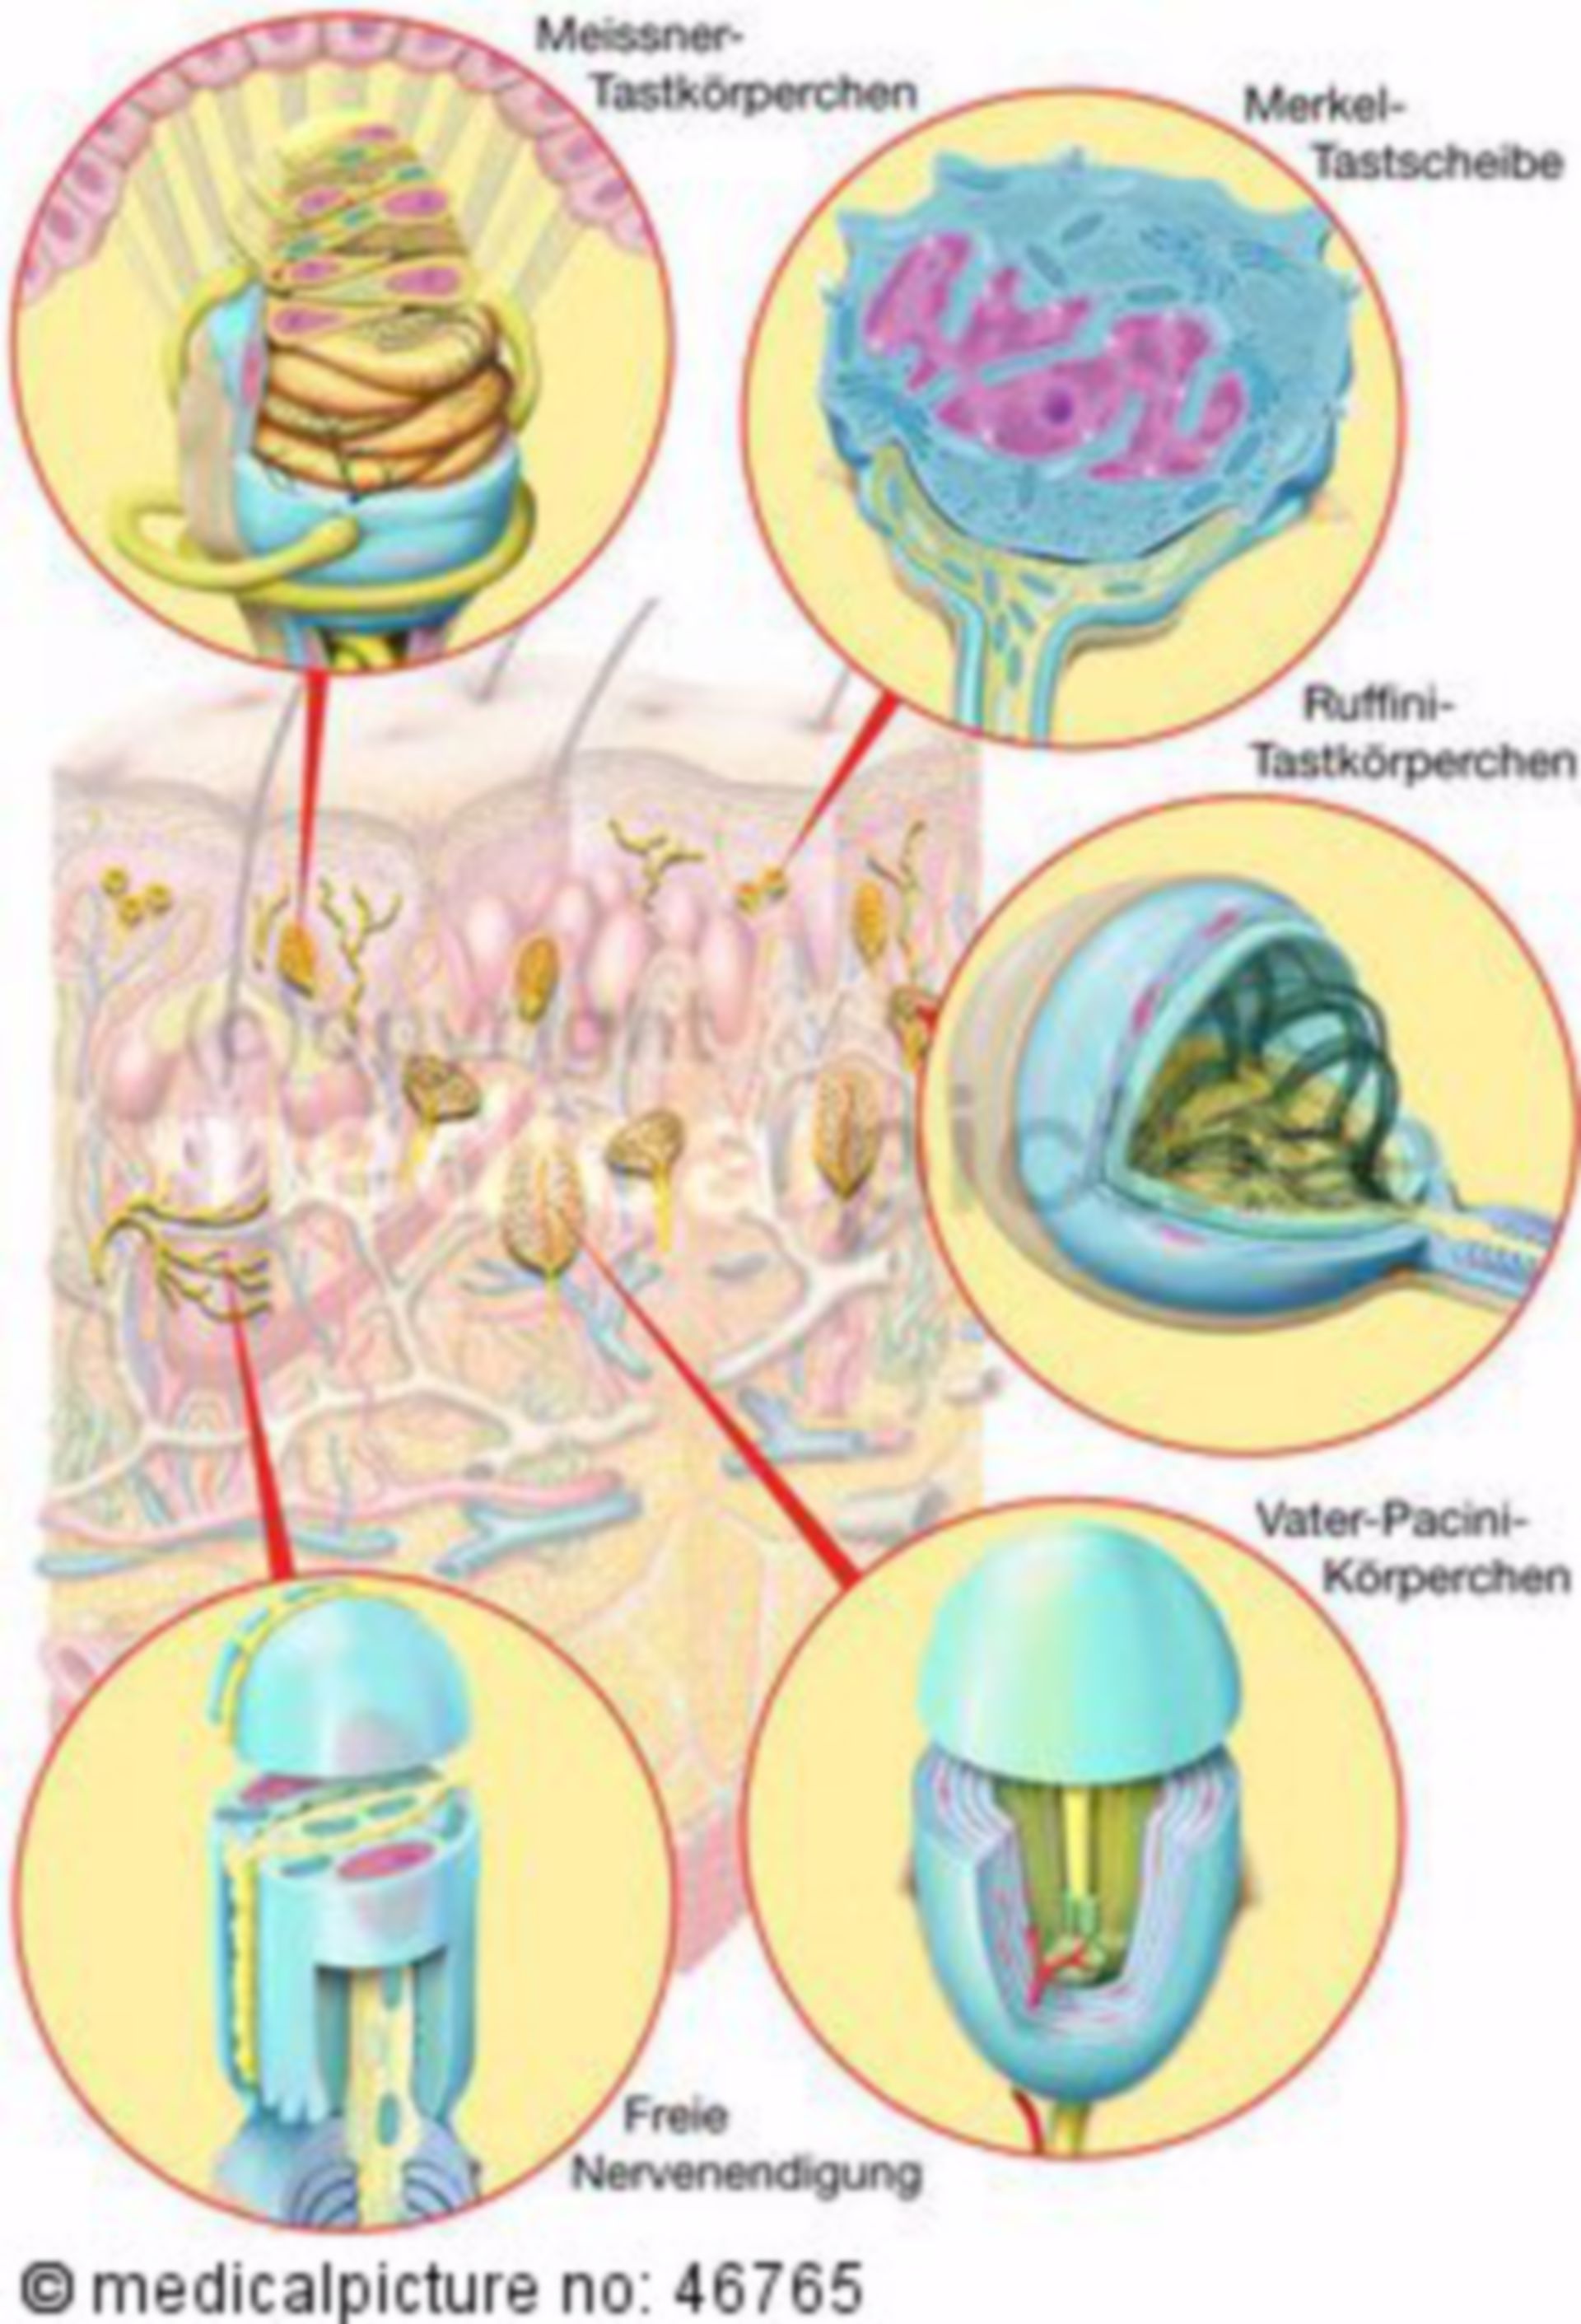 Sesory receptor cells of the skin